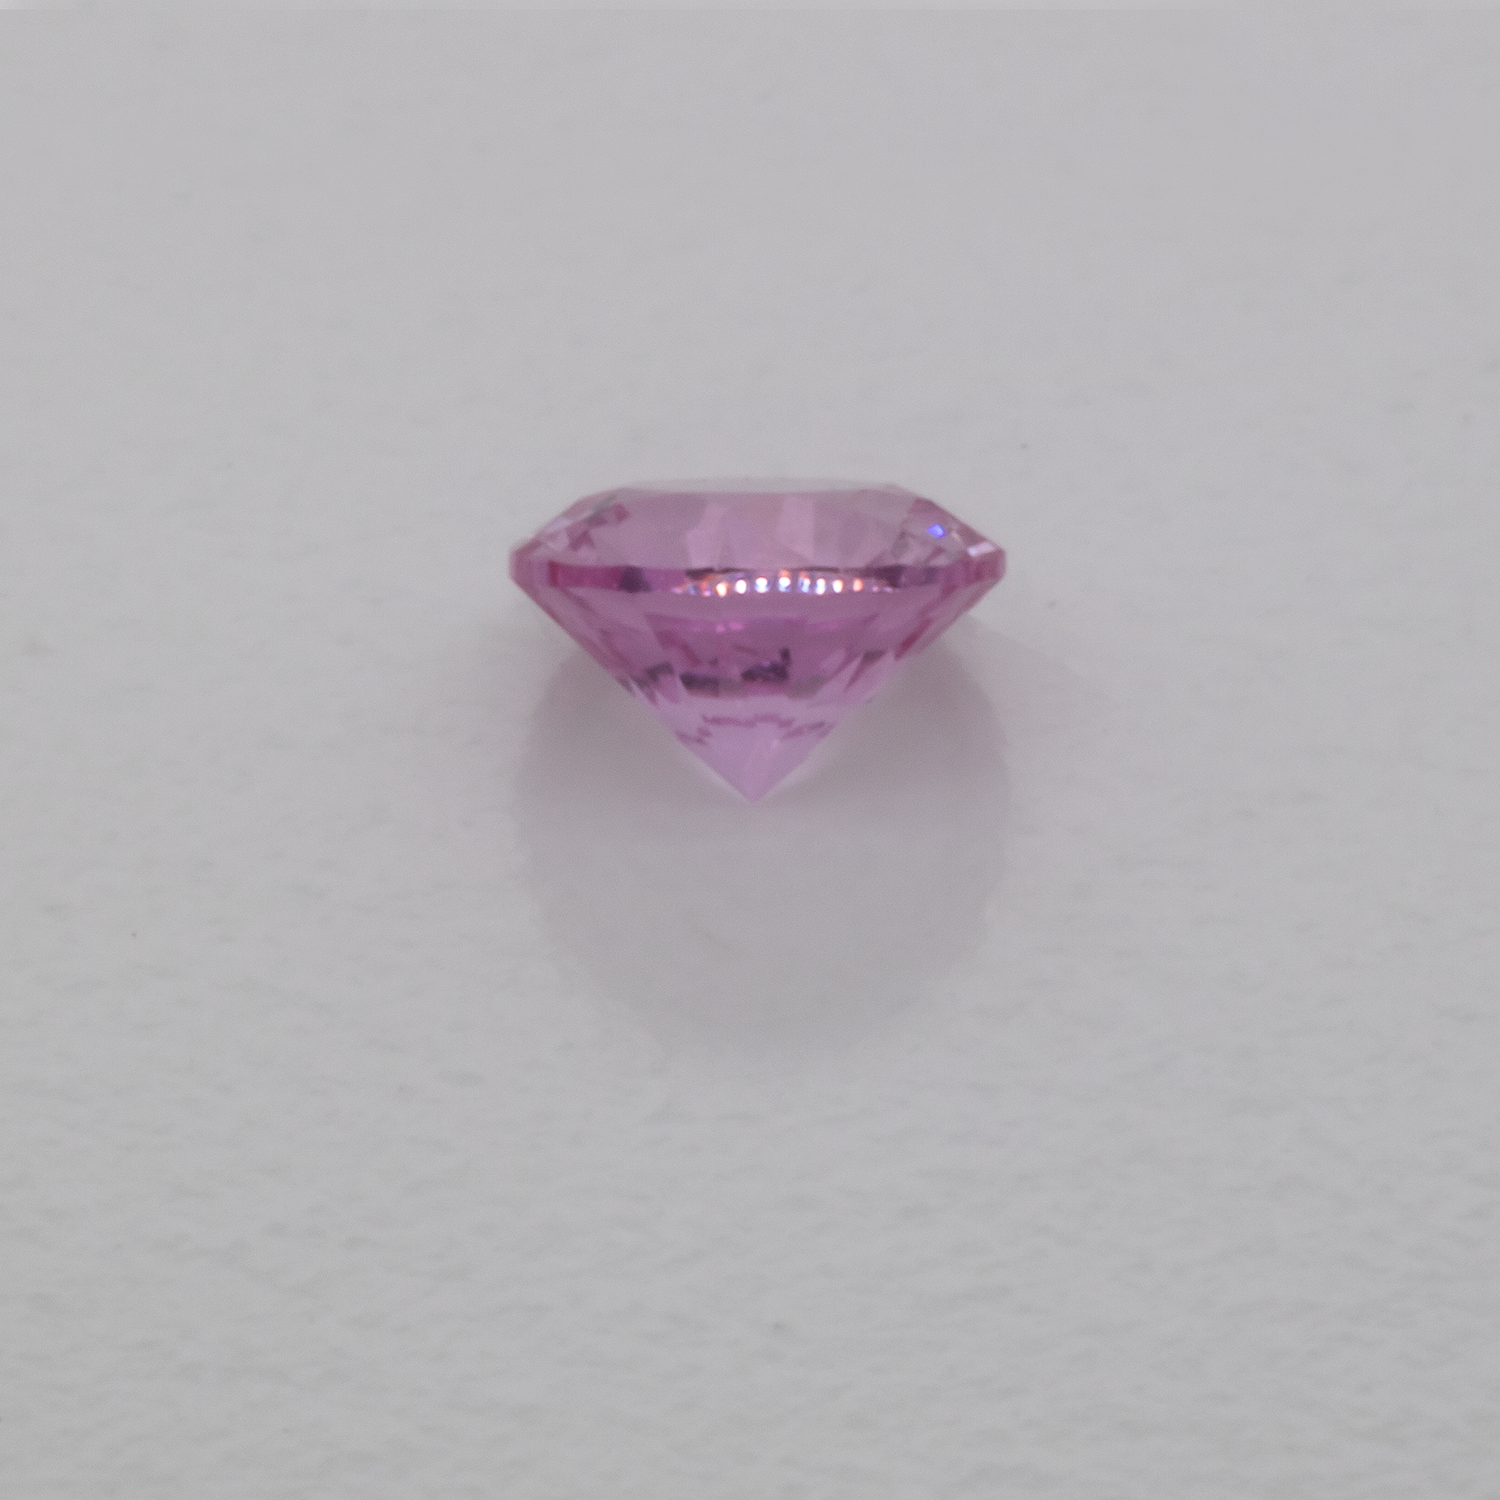 Saphir - rosa, rund, 3x3 mm, 0.13 cts, Nr. XSR11235